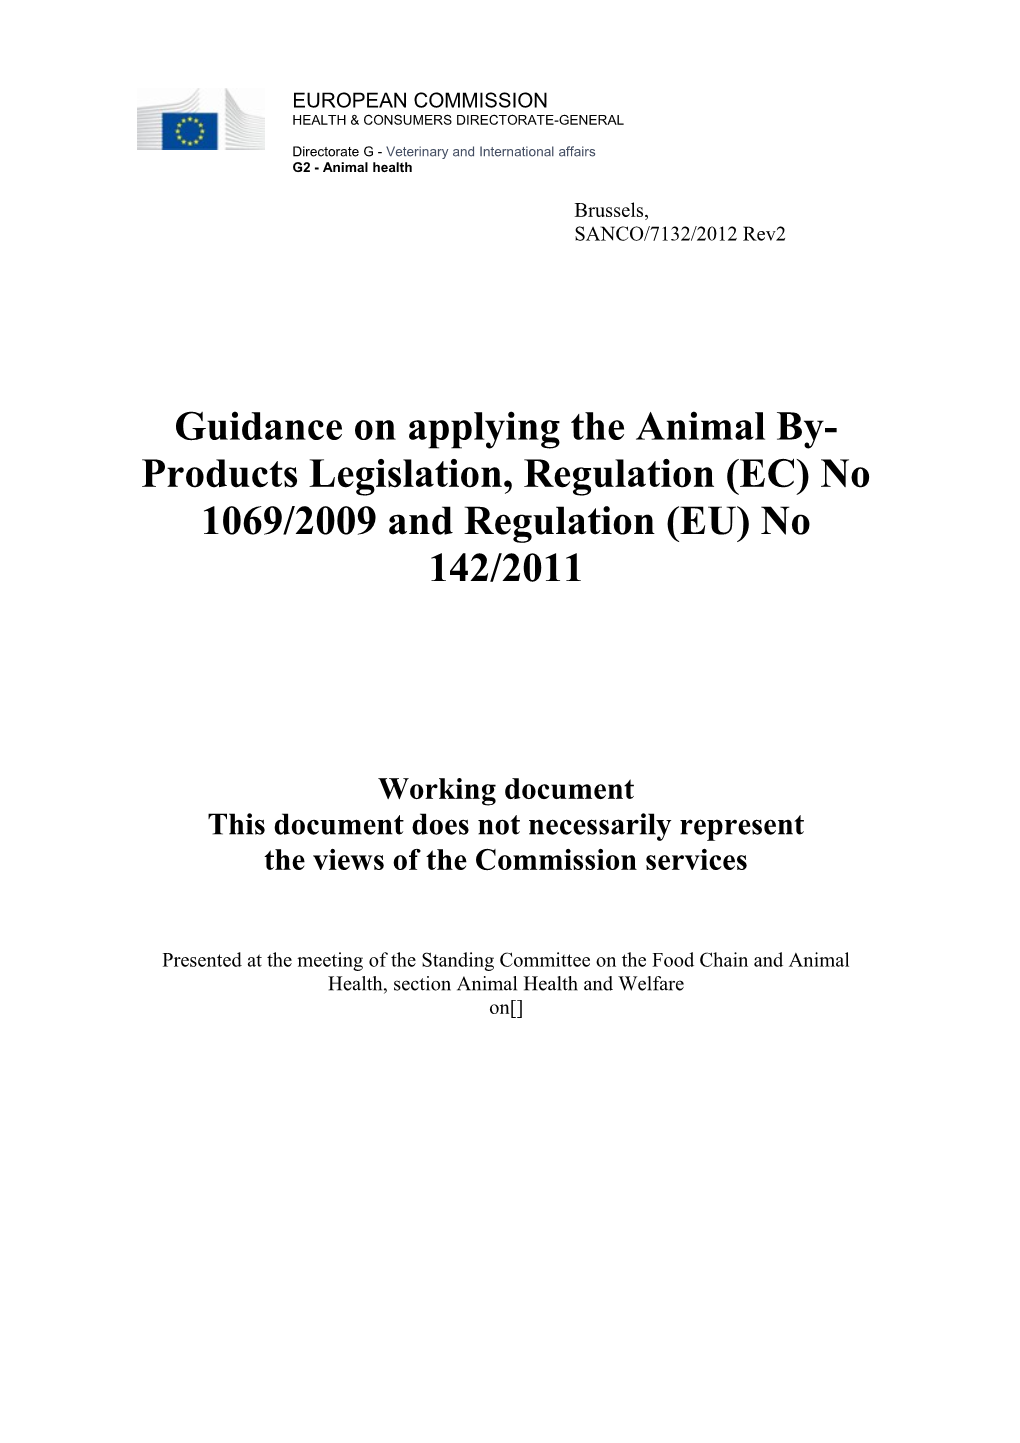 Guidance on Applying the Animal By-Products Legislation, Regulation (EC) No 1069/2009